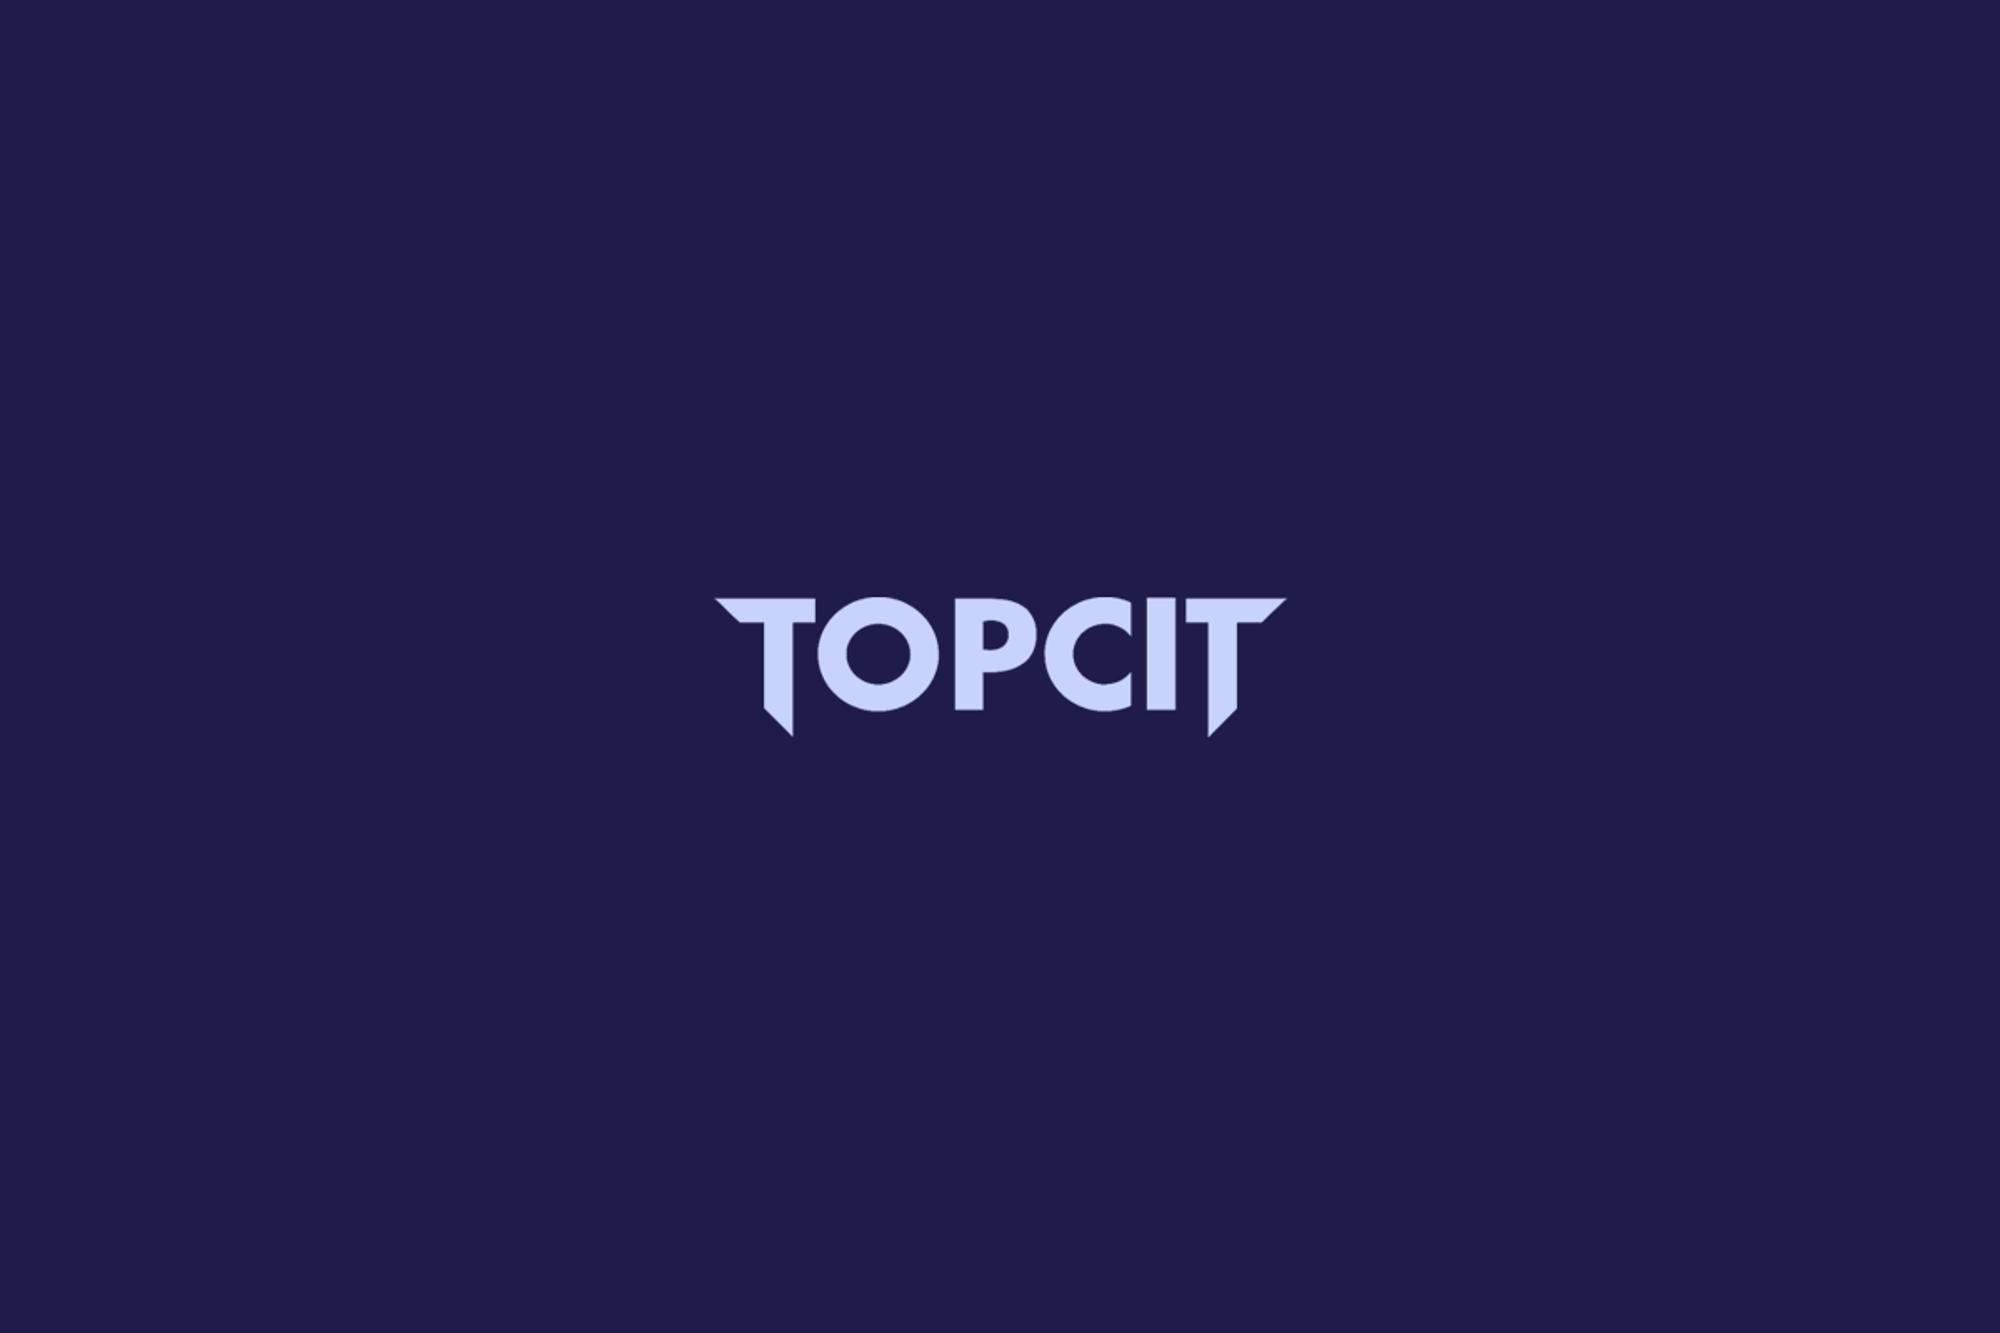 TOPCIT 요약정리 - 1. 소프트웨어 개발